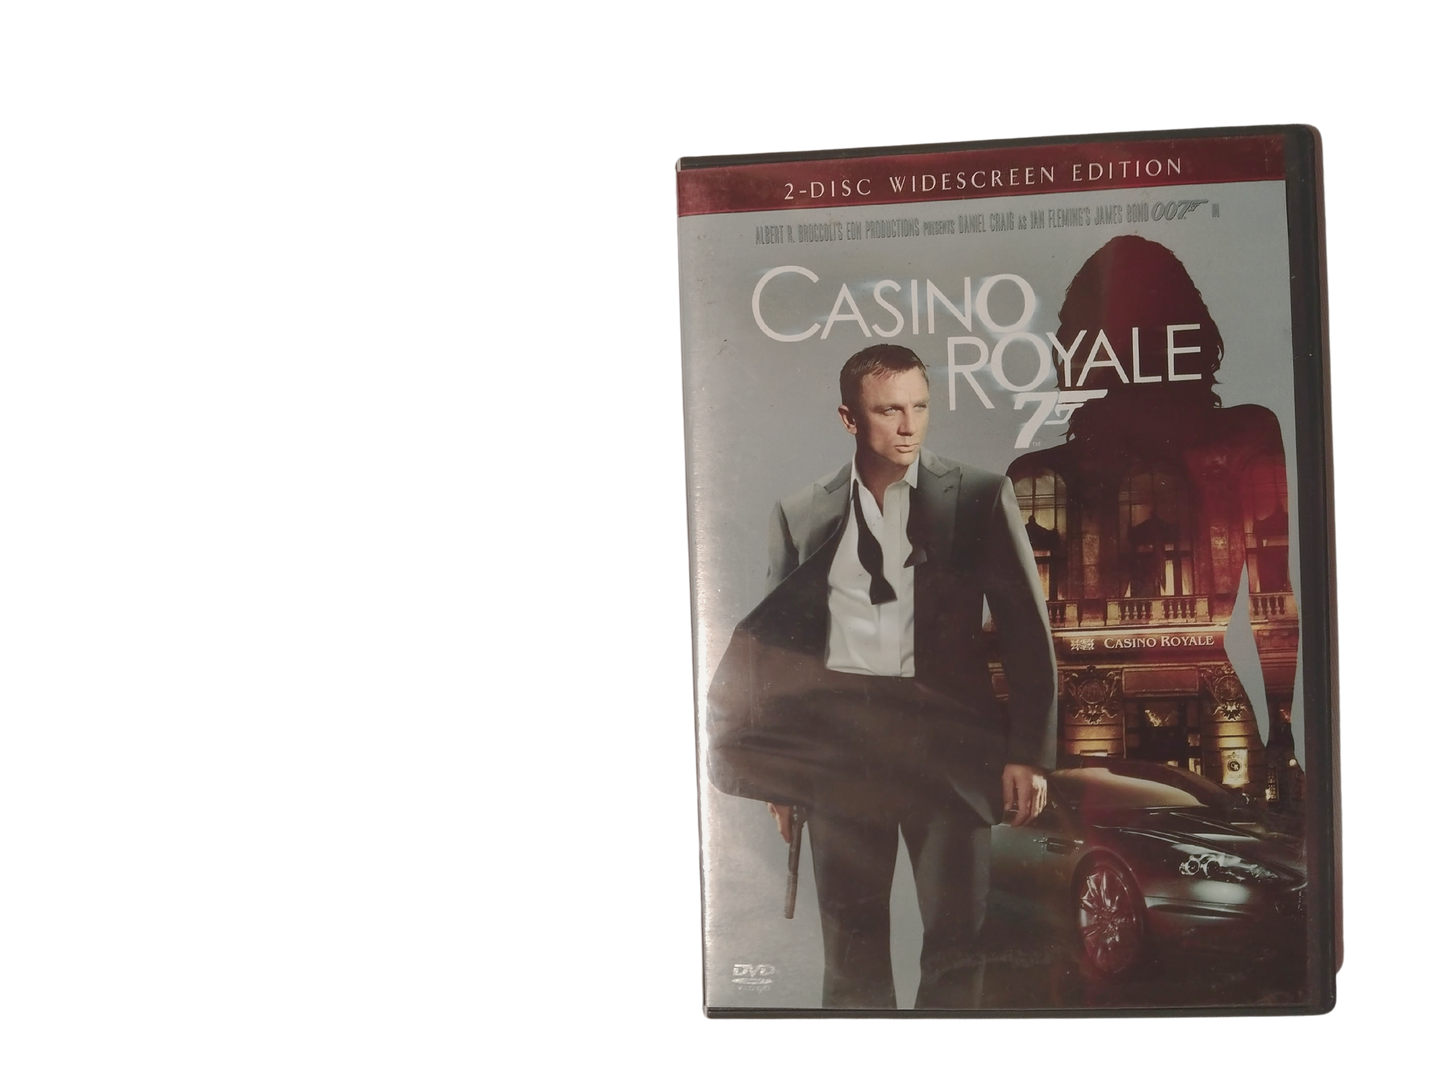 007 Casino Royale 2-Disc Widesceen Edition